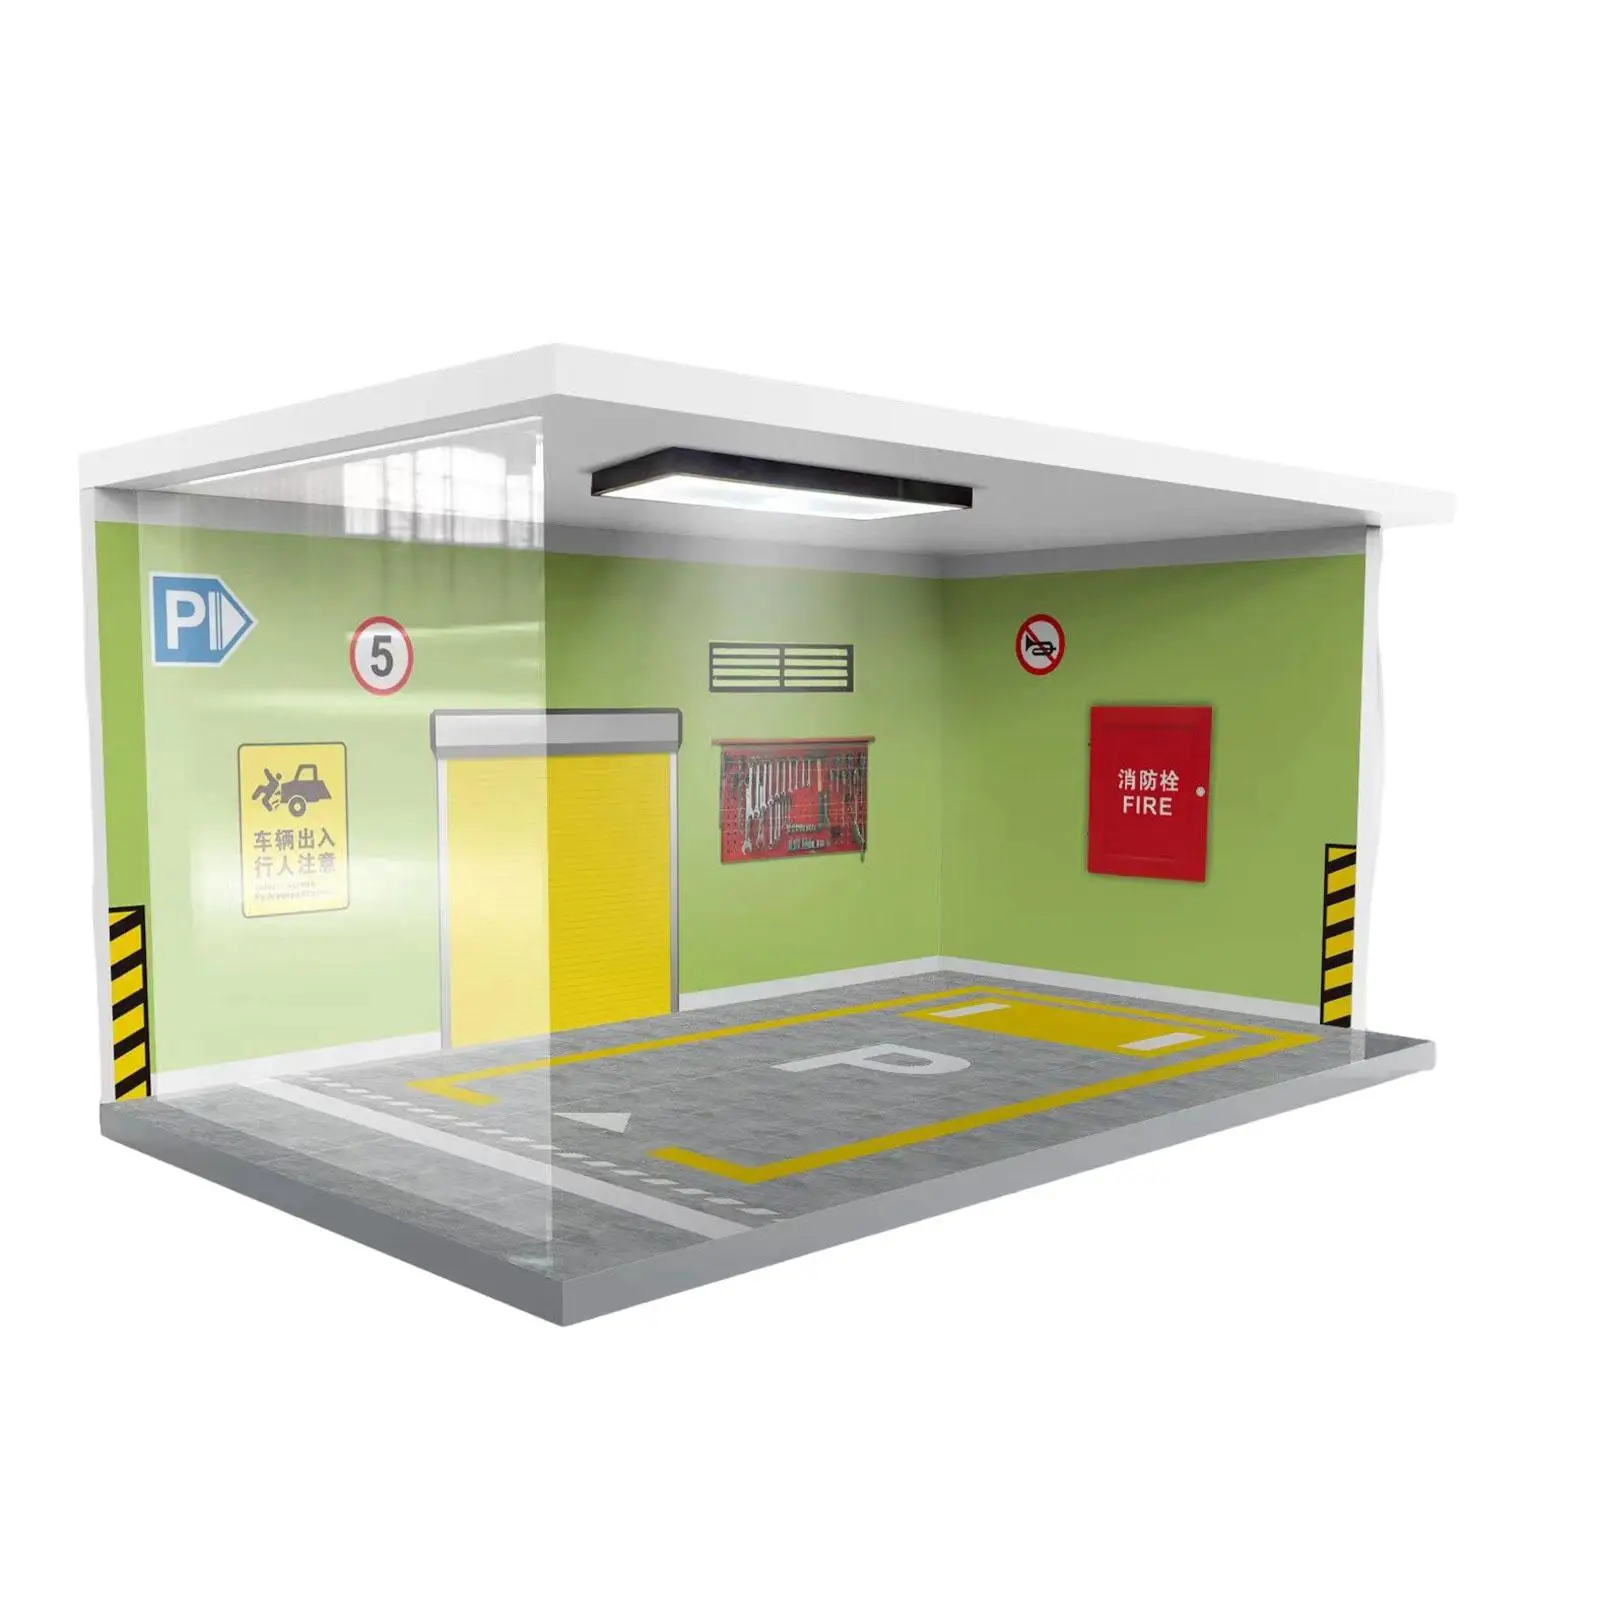 1/24 Scale Parking Lot Scene Model Garage Display Case with Lights Street Parking Lot for Desk Car Model Toy Gifts